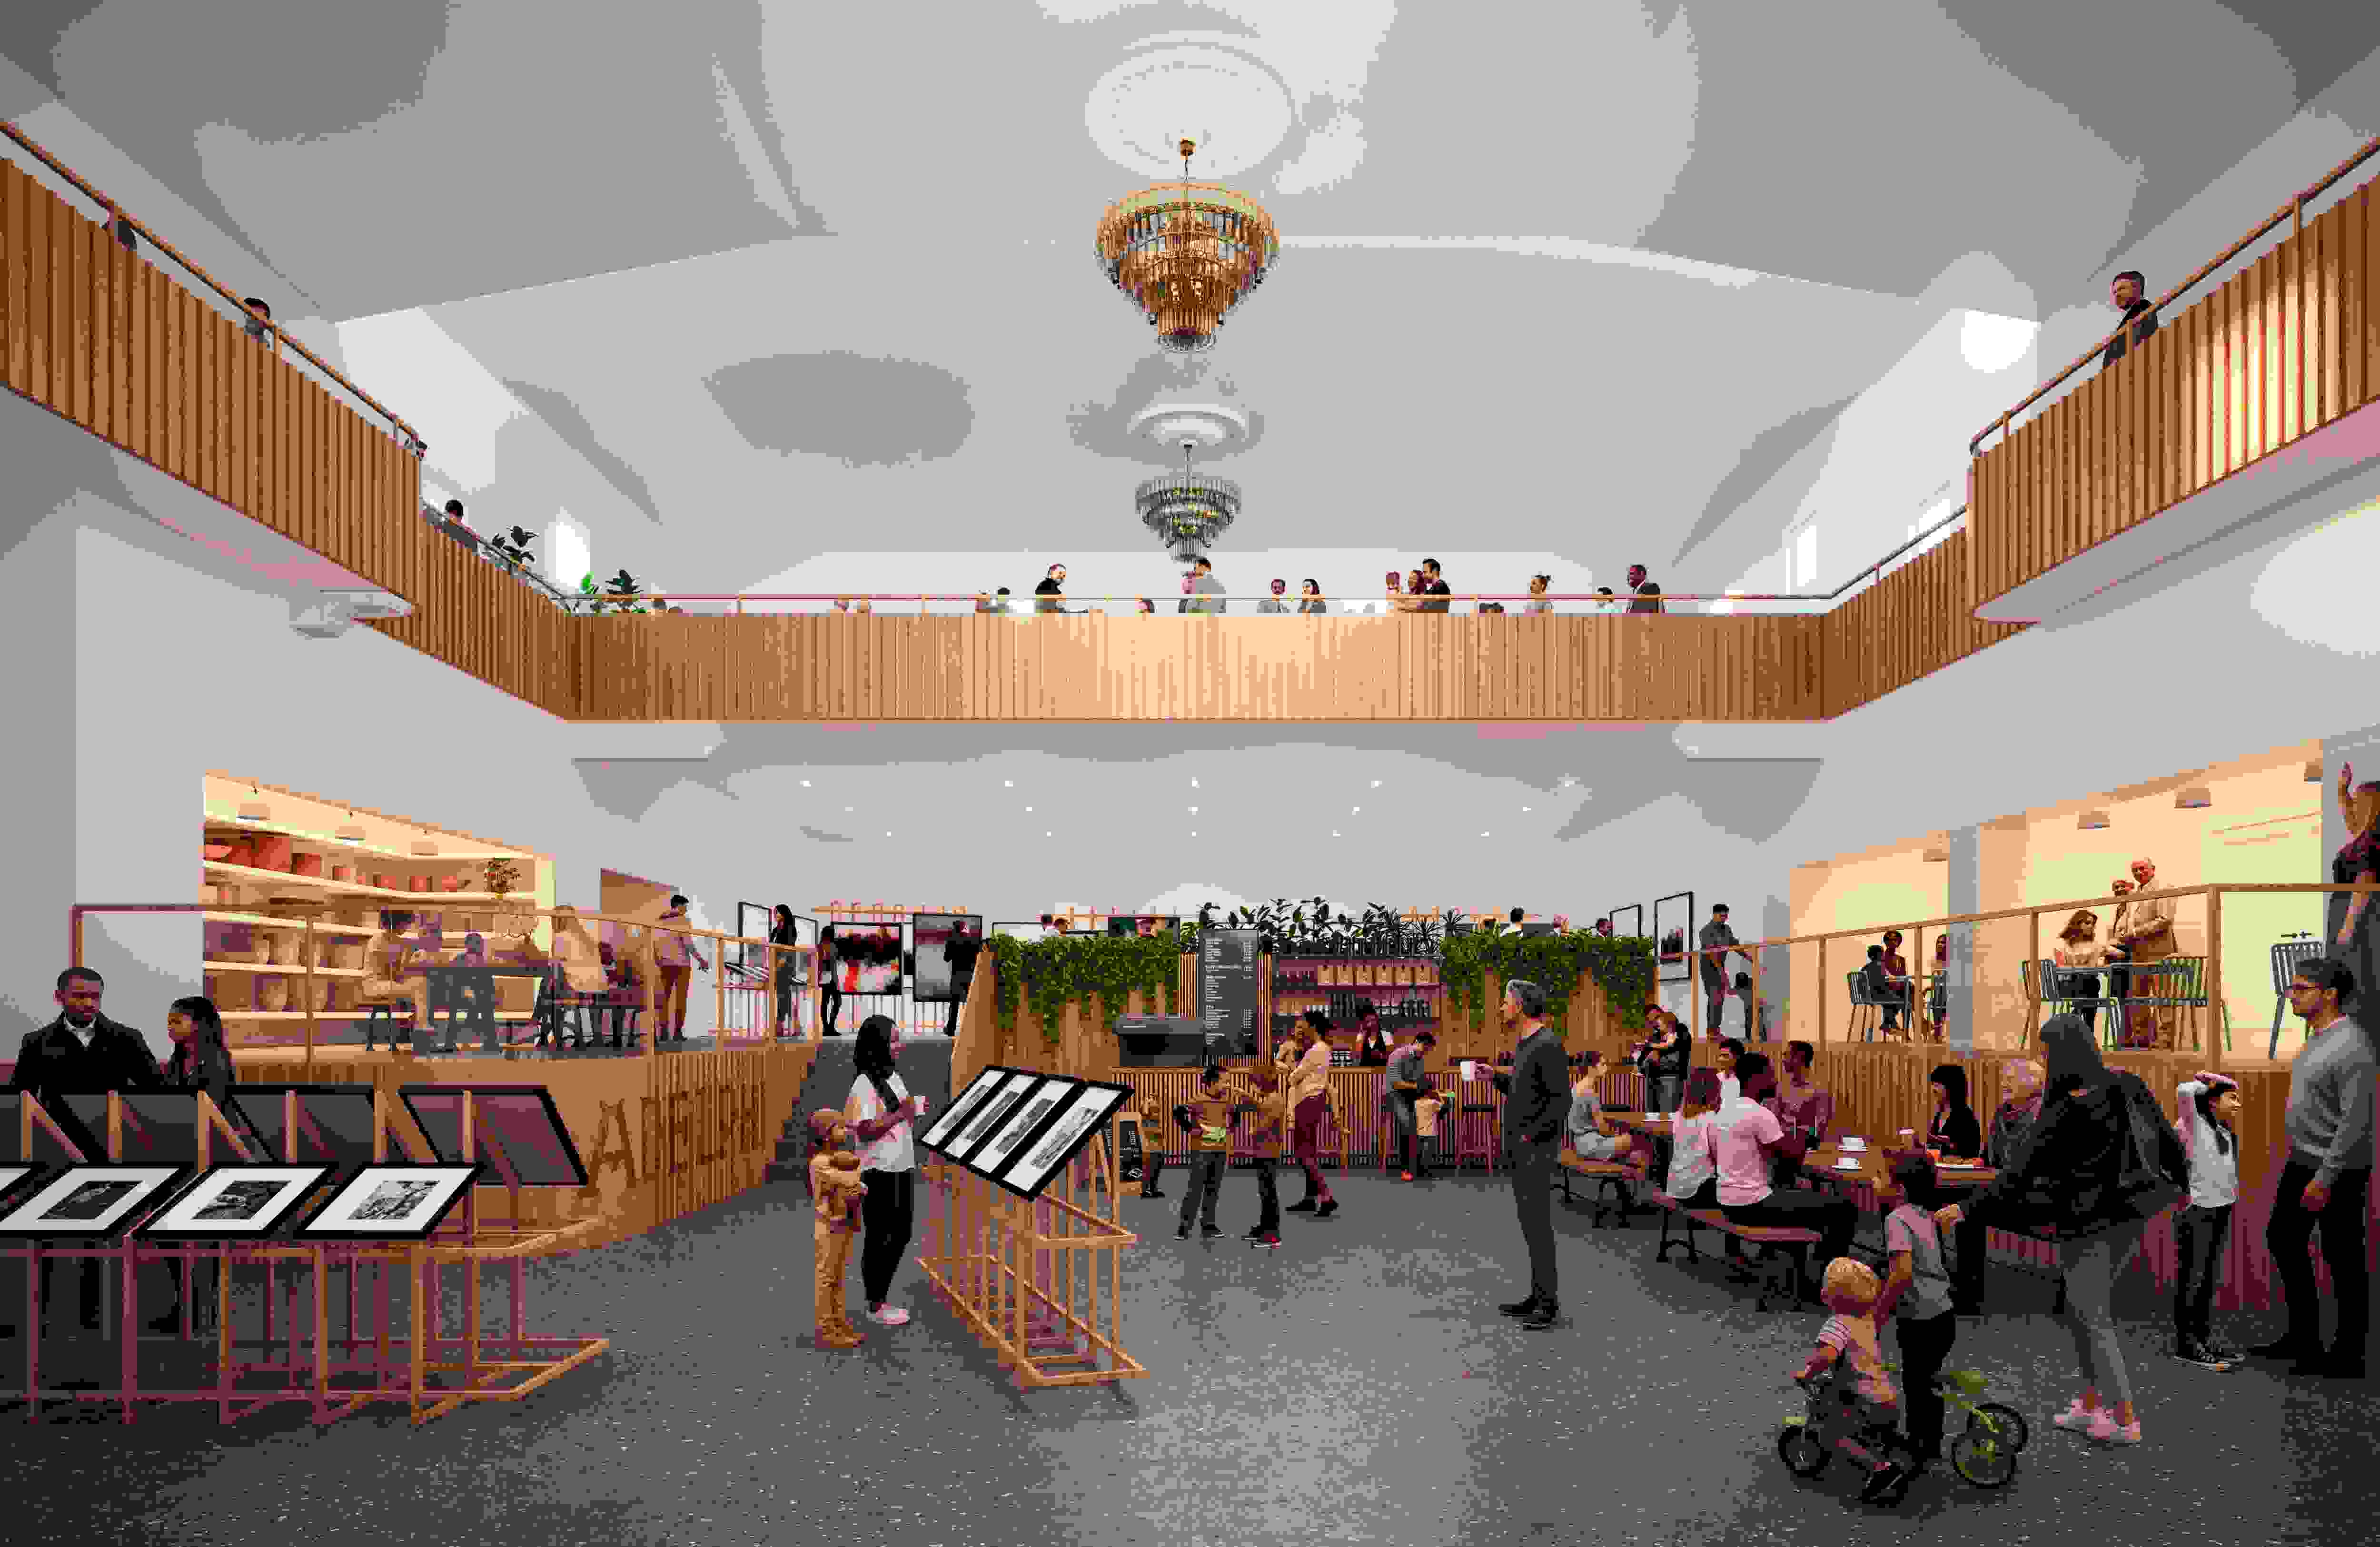 A CGI image of the Adelphi Cinema proposal